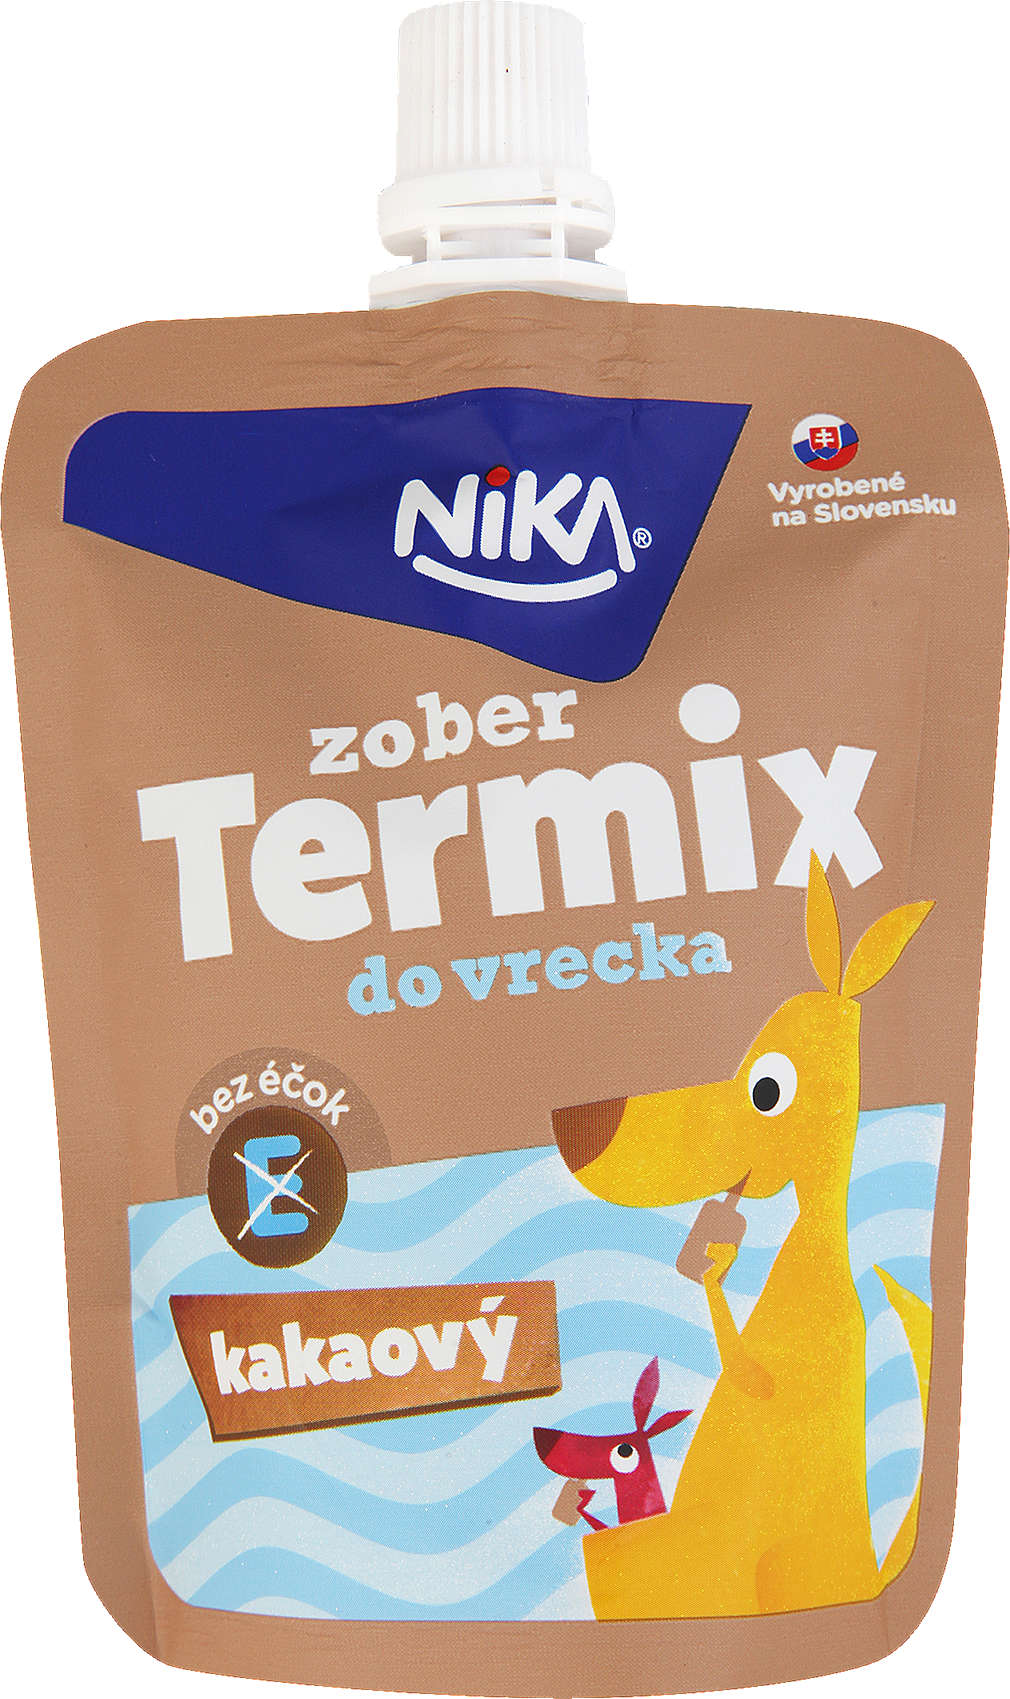 Zobrazenie výrobku Nika Termix do vrecka